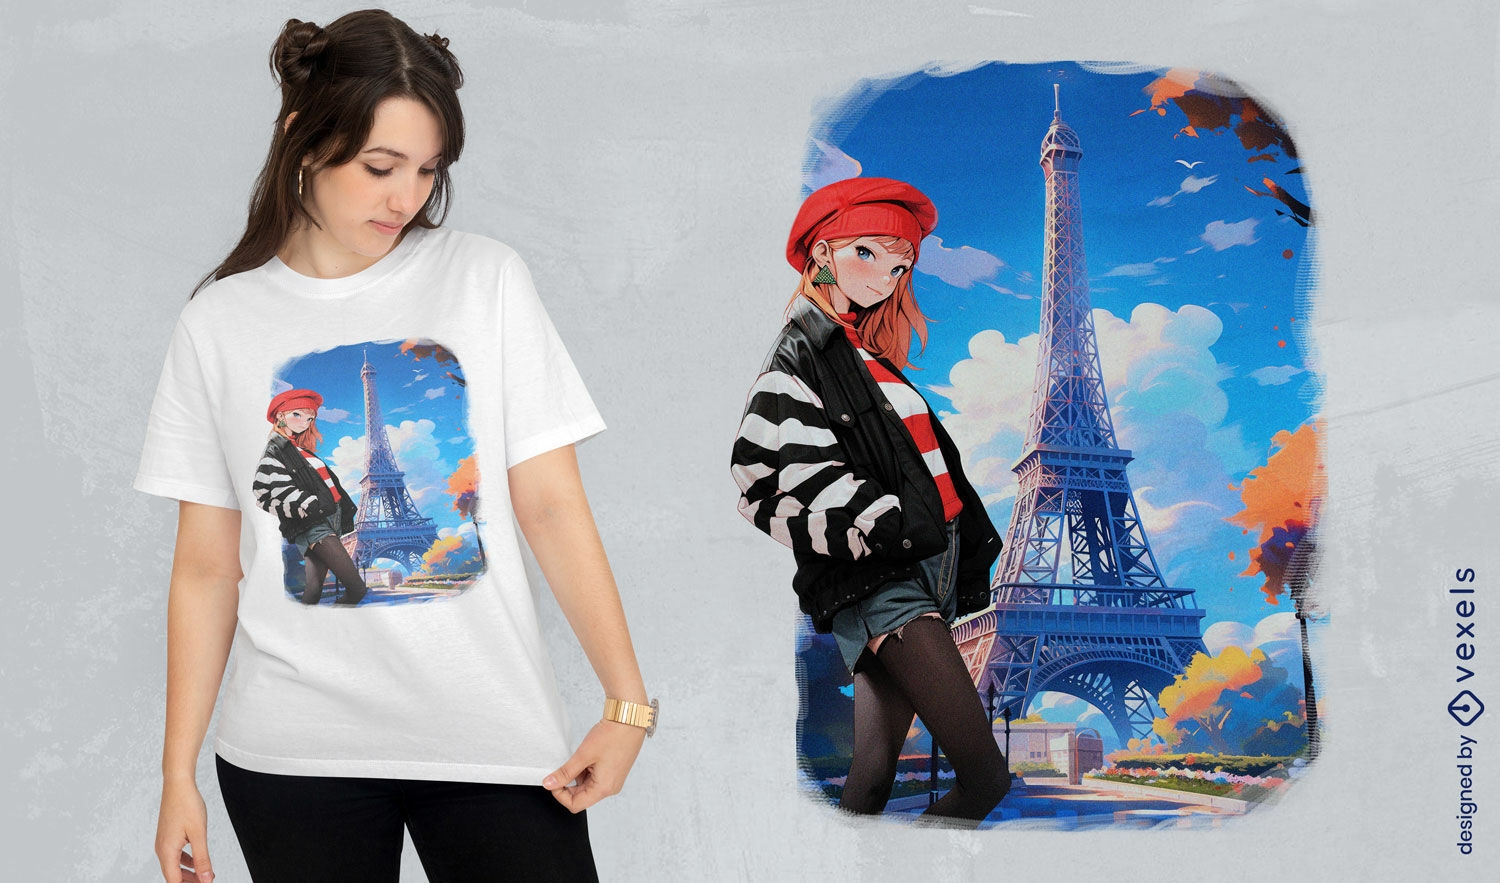 Diseño de camiseta de chica parisina.